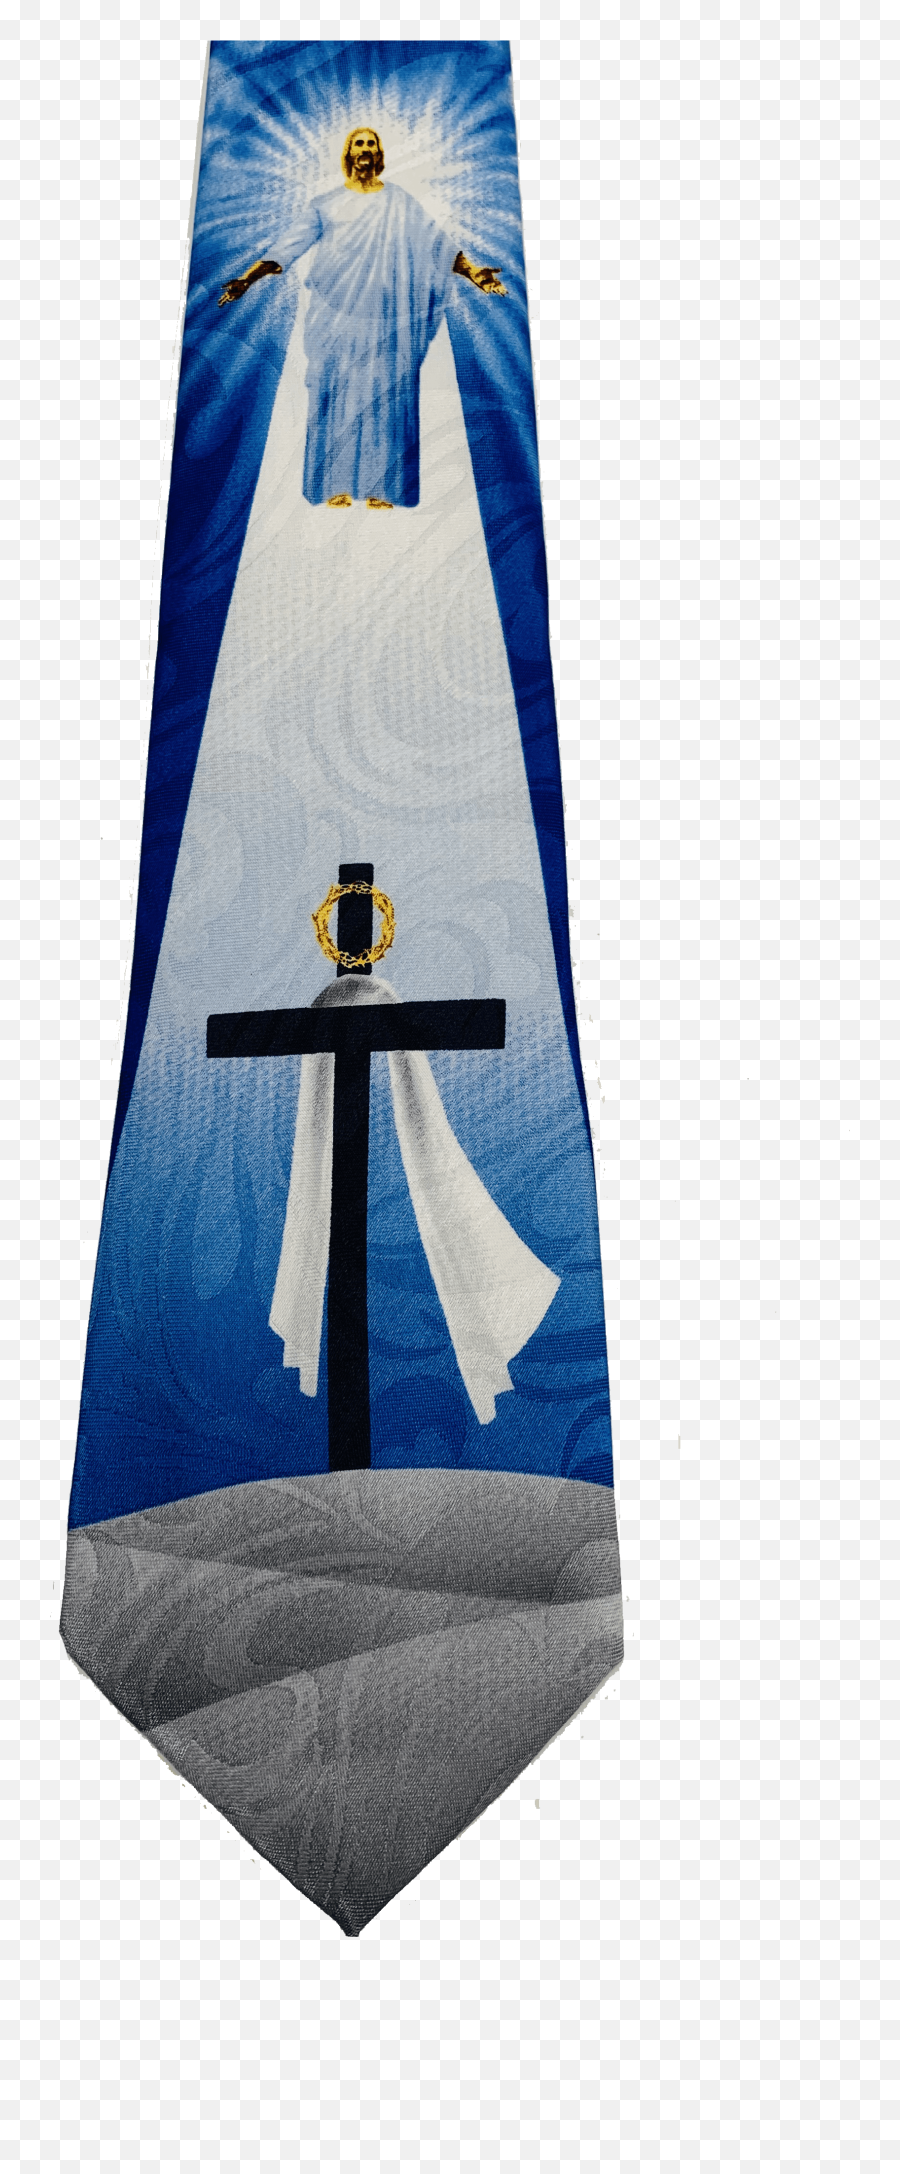 Christian Religious Necktie Jesus Neck Tie Sku 1025 Emoji,Blue Heart Emojis And Blue Butterflies Means Or Symbolic